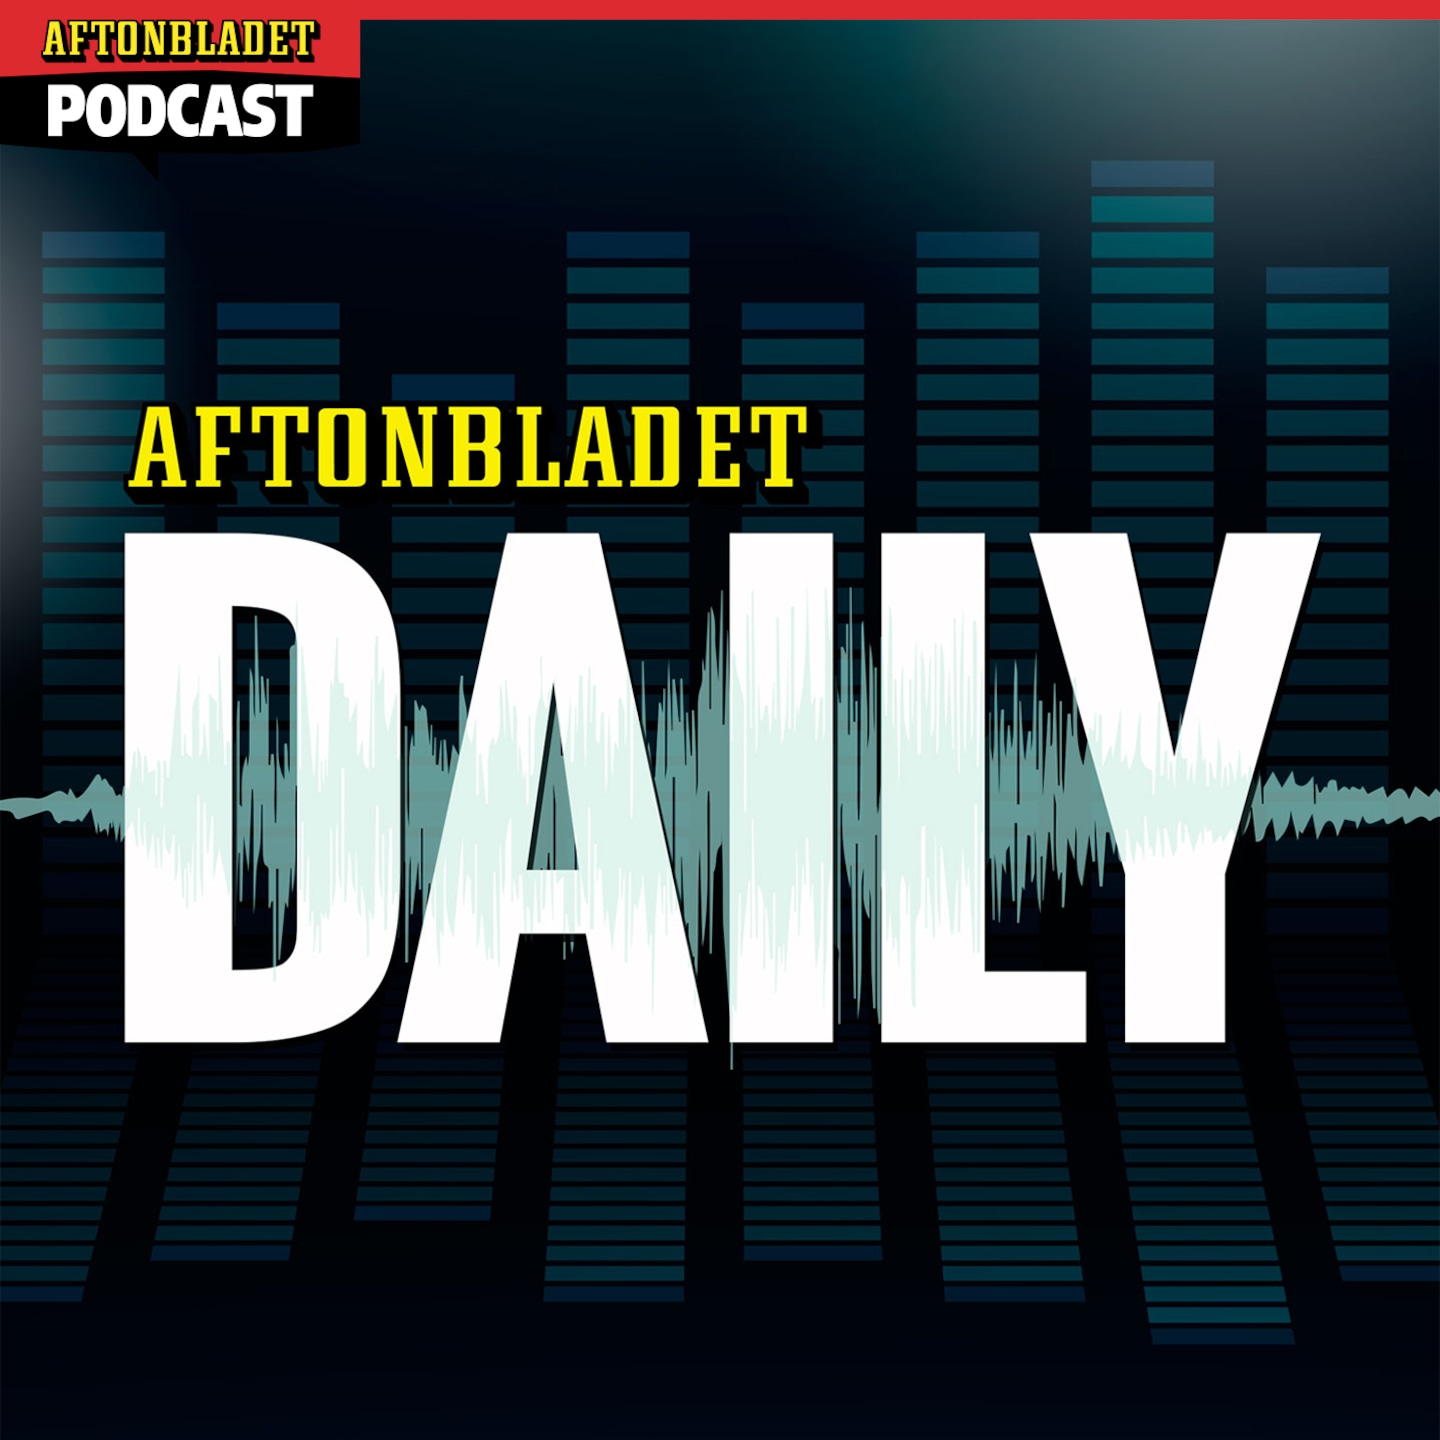 Indian Severe Heat – Aftonbladet podcast